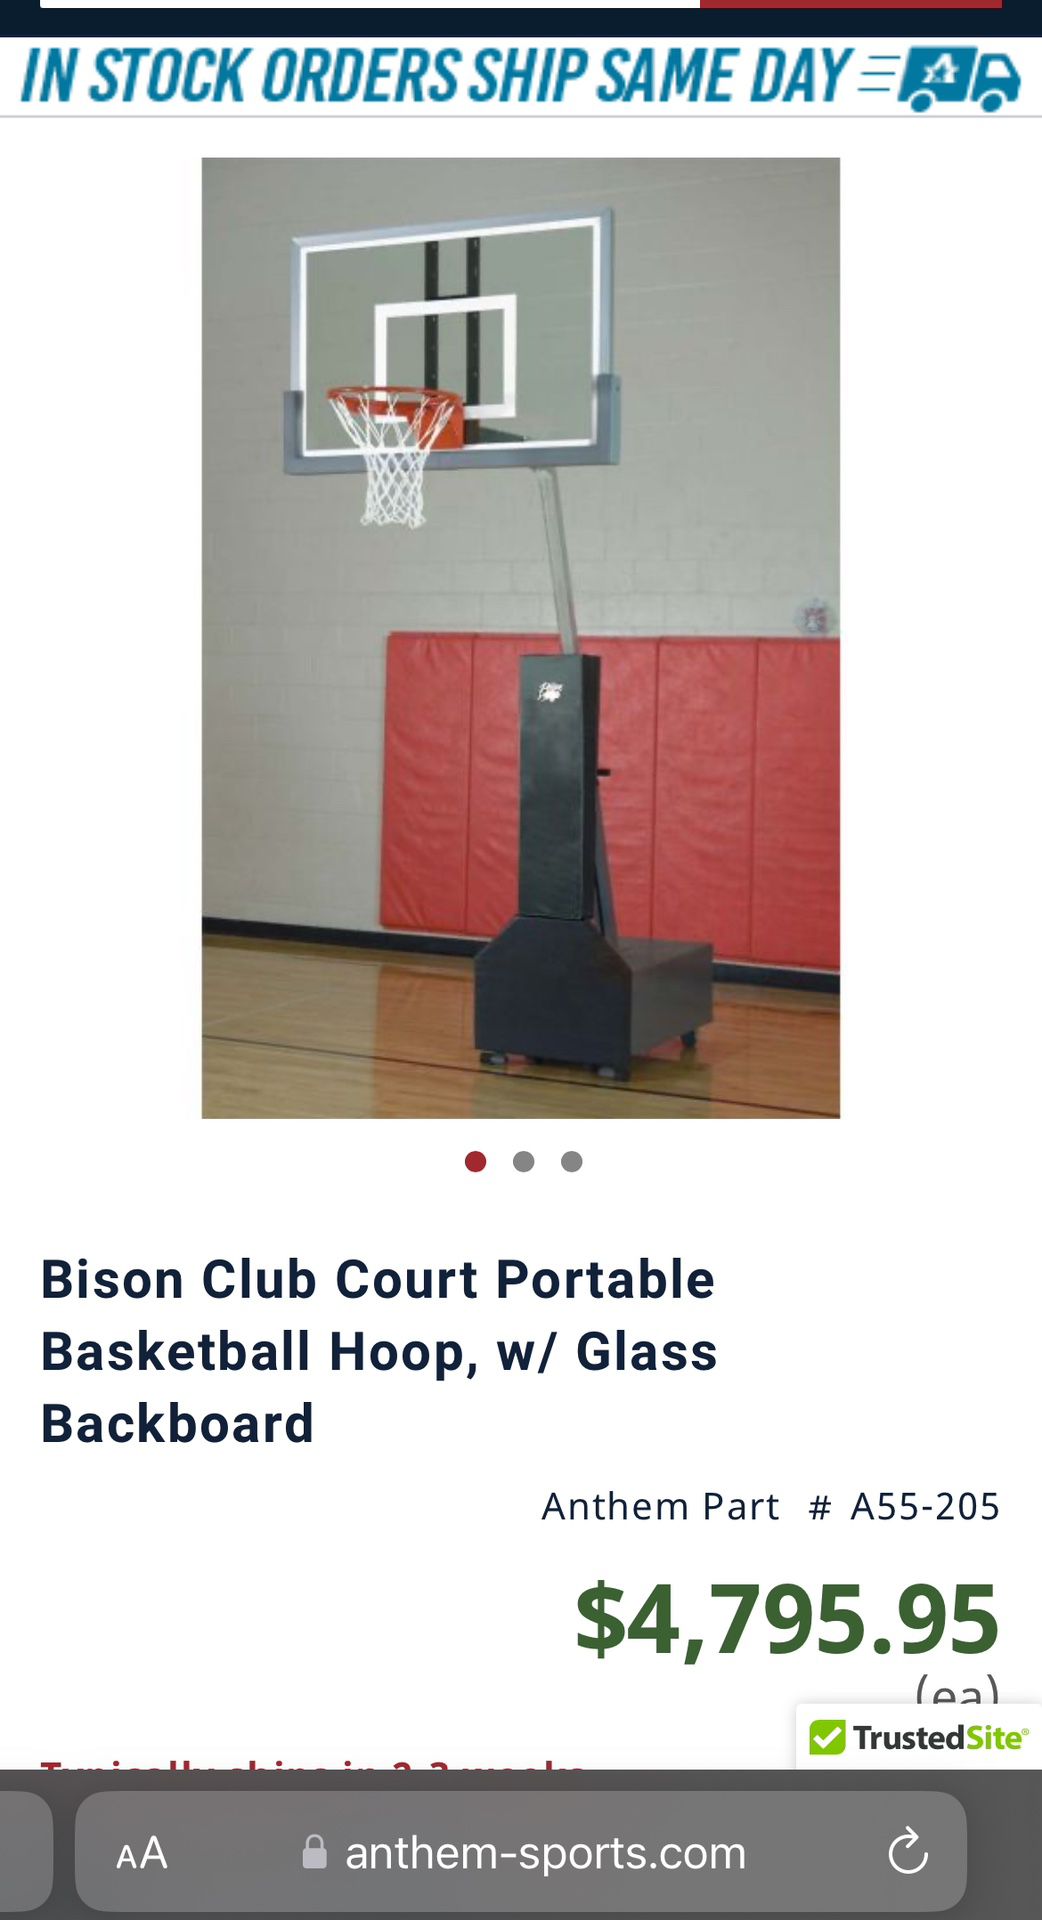 Bison Club Court Portable Basketball Hoop, w/ Glass Backboard